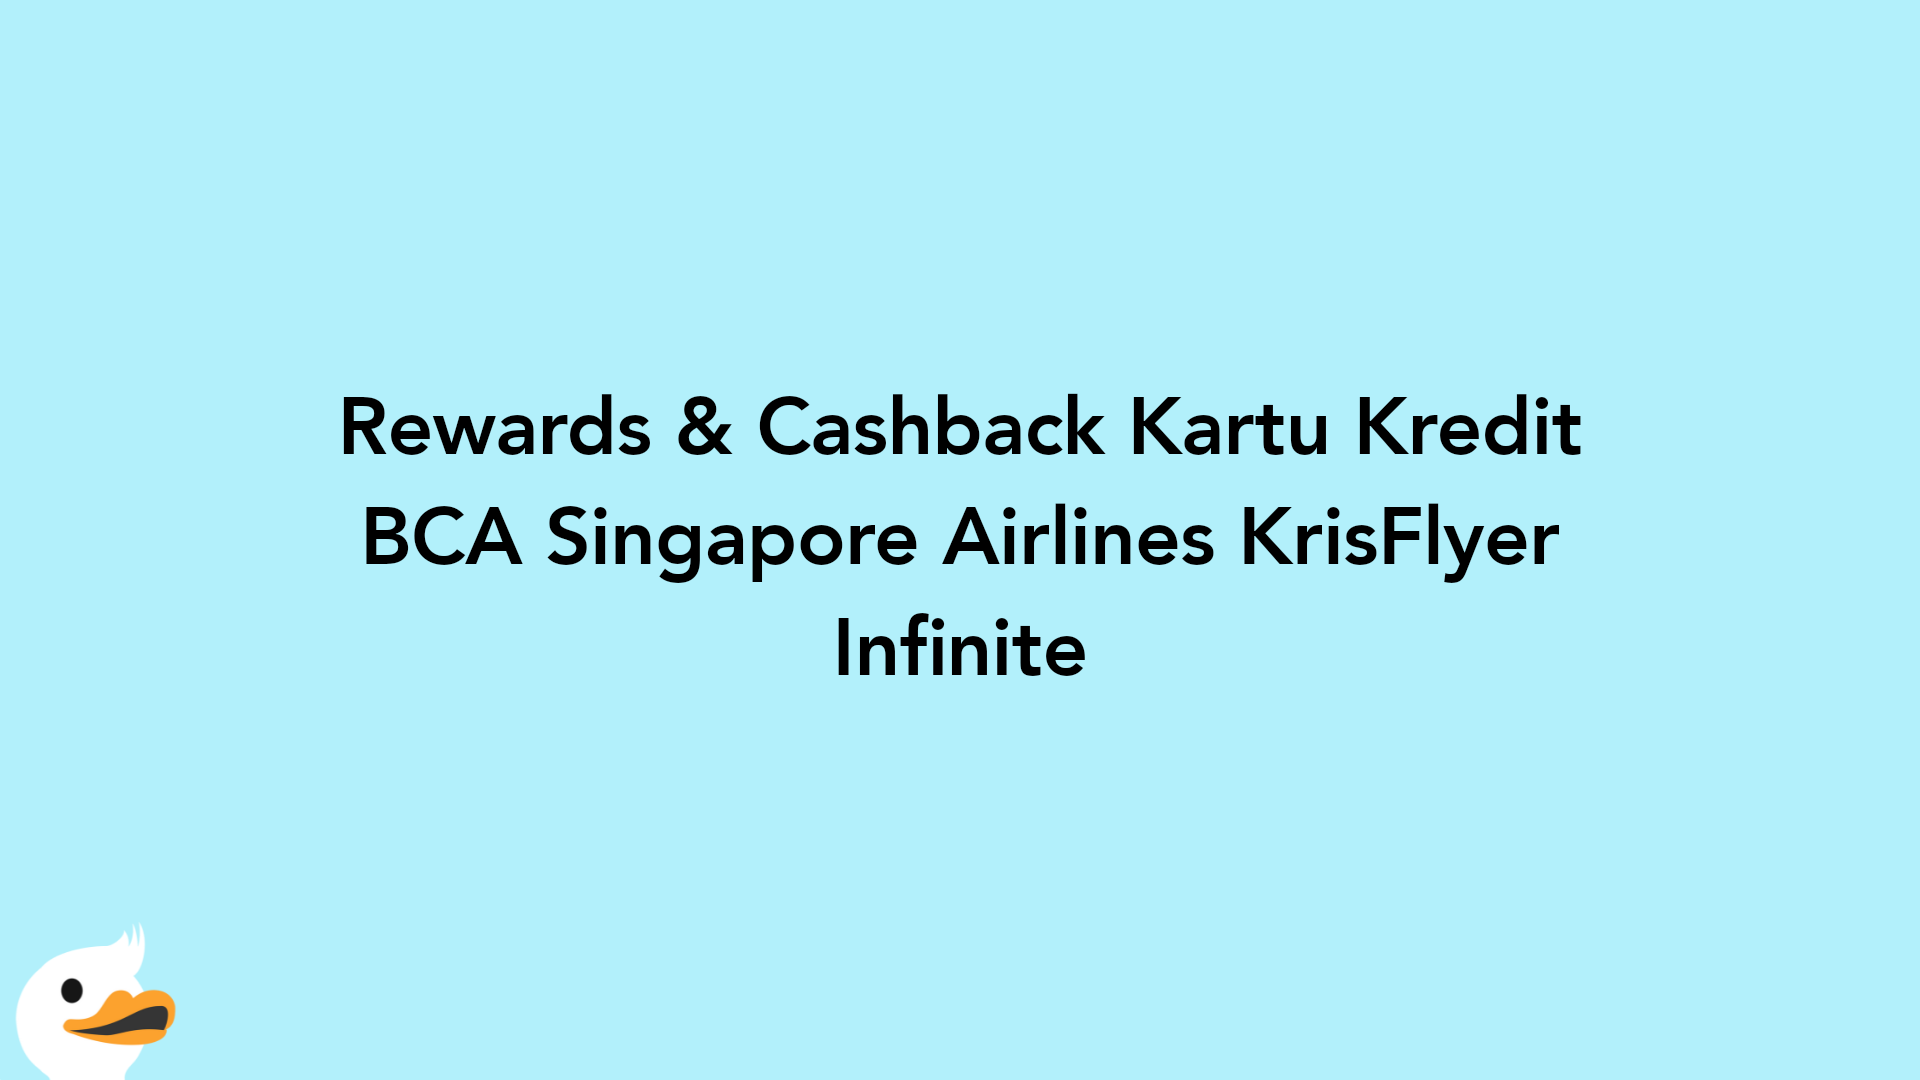 Rewards & Cashback Kartu Kredit BCA Singapore Airlines KrisFlyer Infinite